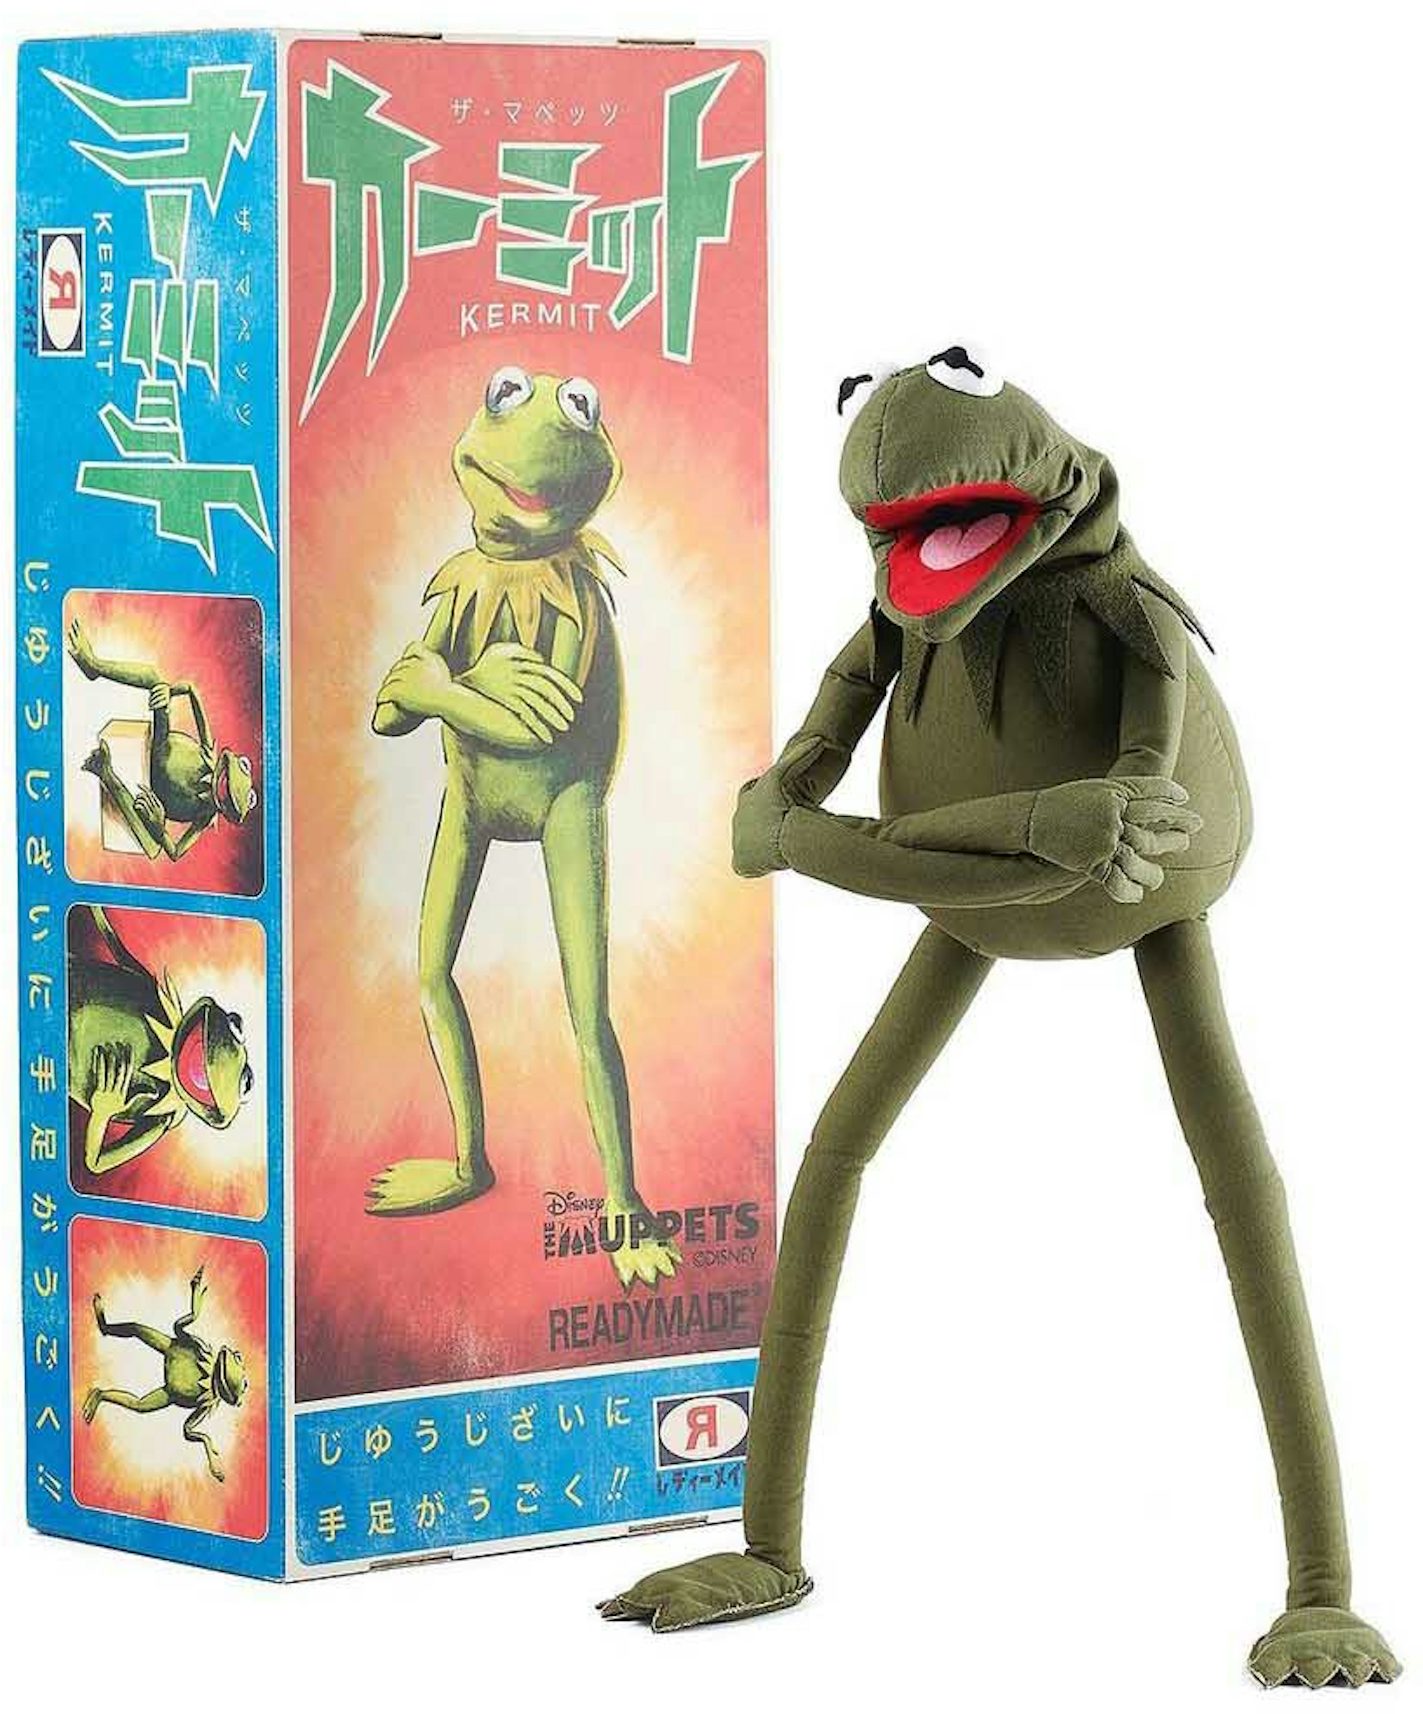 Supreme x Medicom Toy Kermit the Frog Kubrick